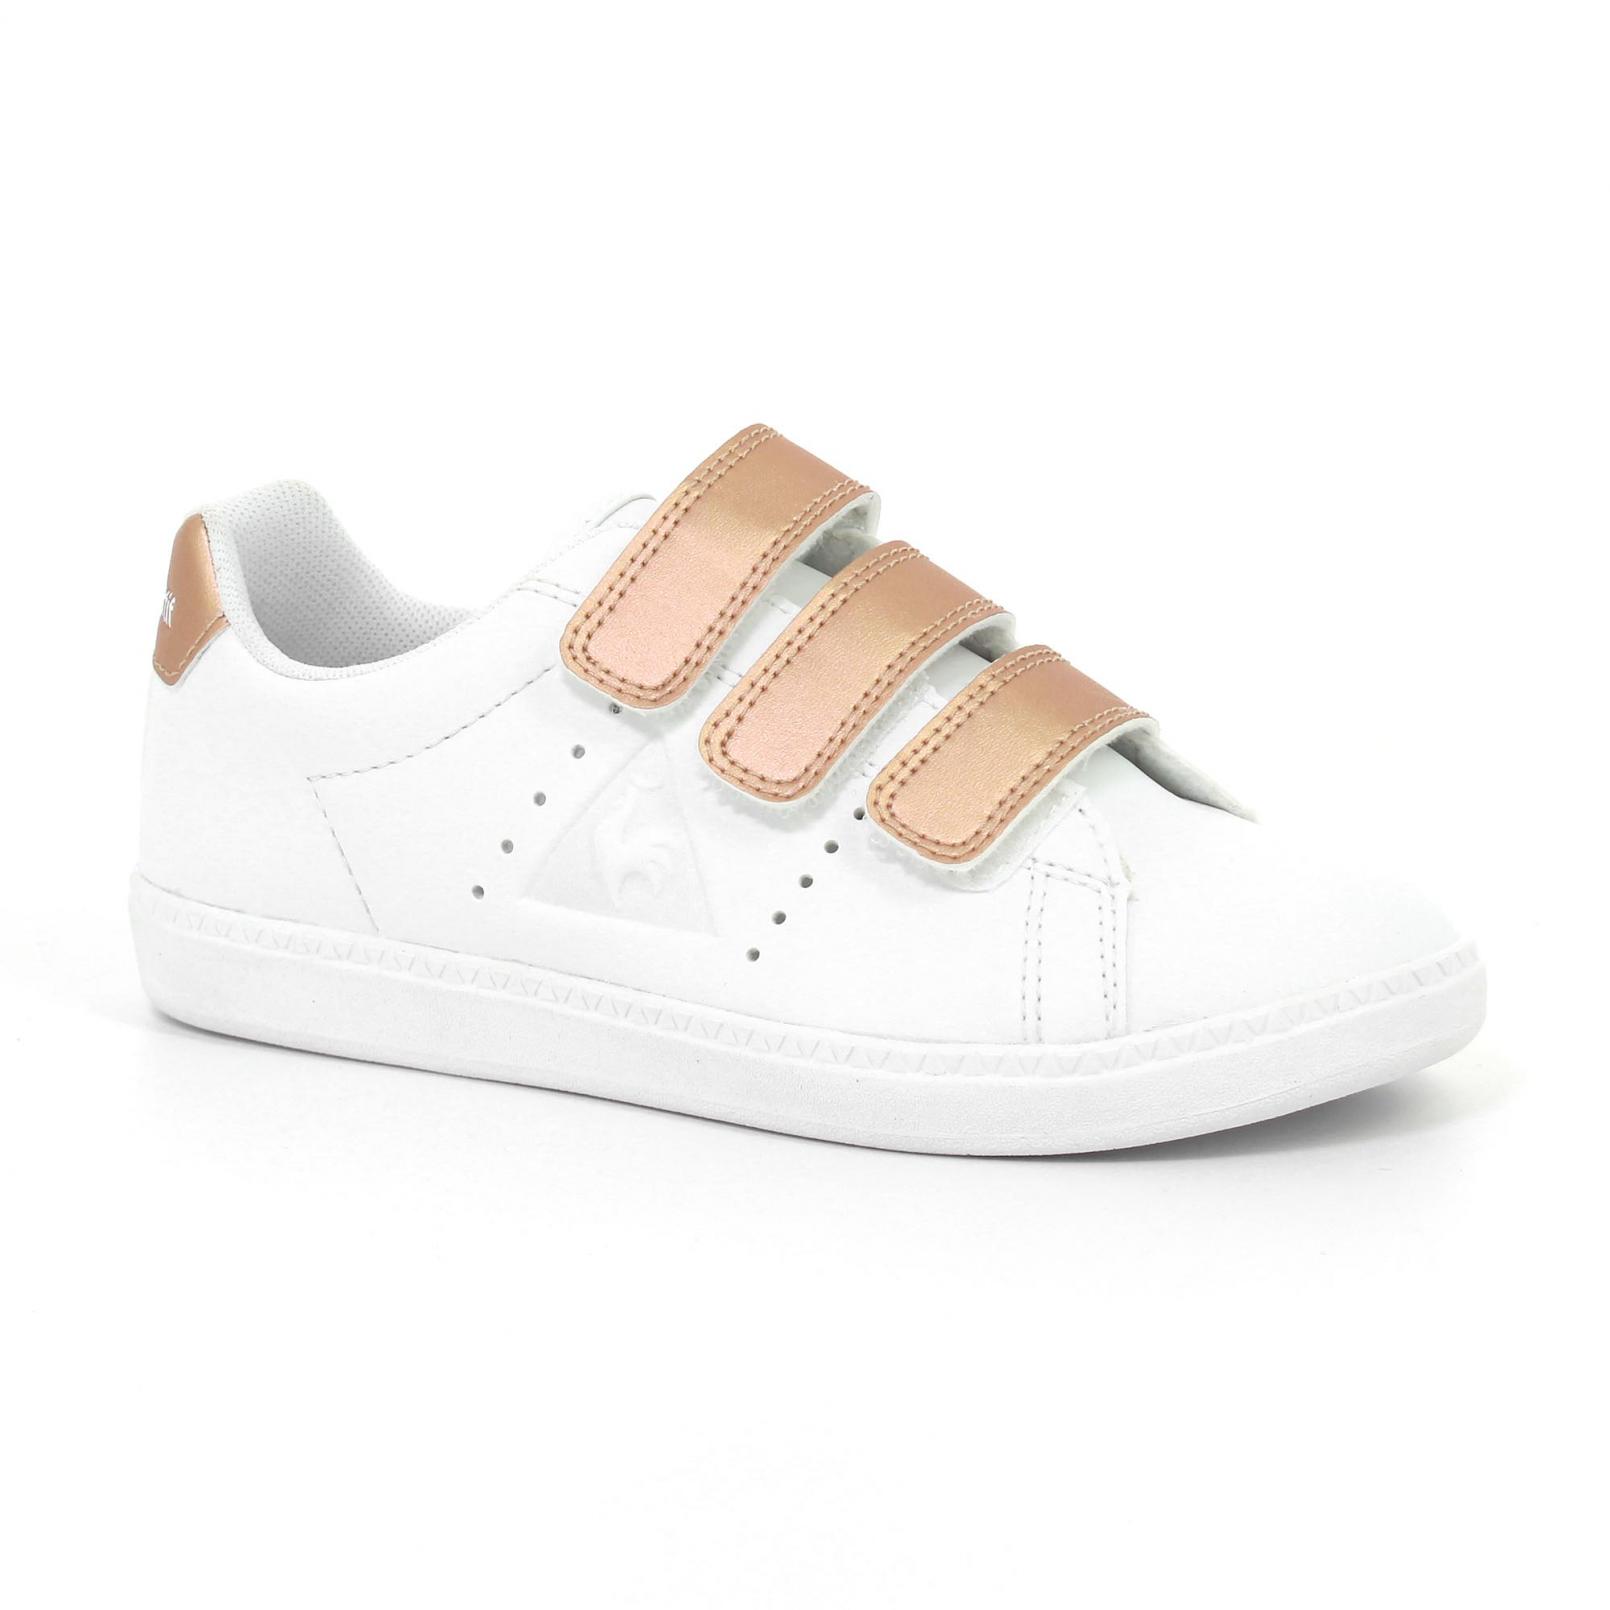 Shoes – Le Coq Sportif Courtone Ps S Lea/Metallic White/Pink